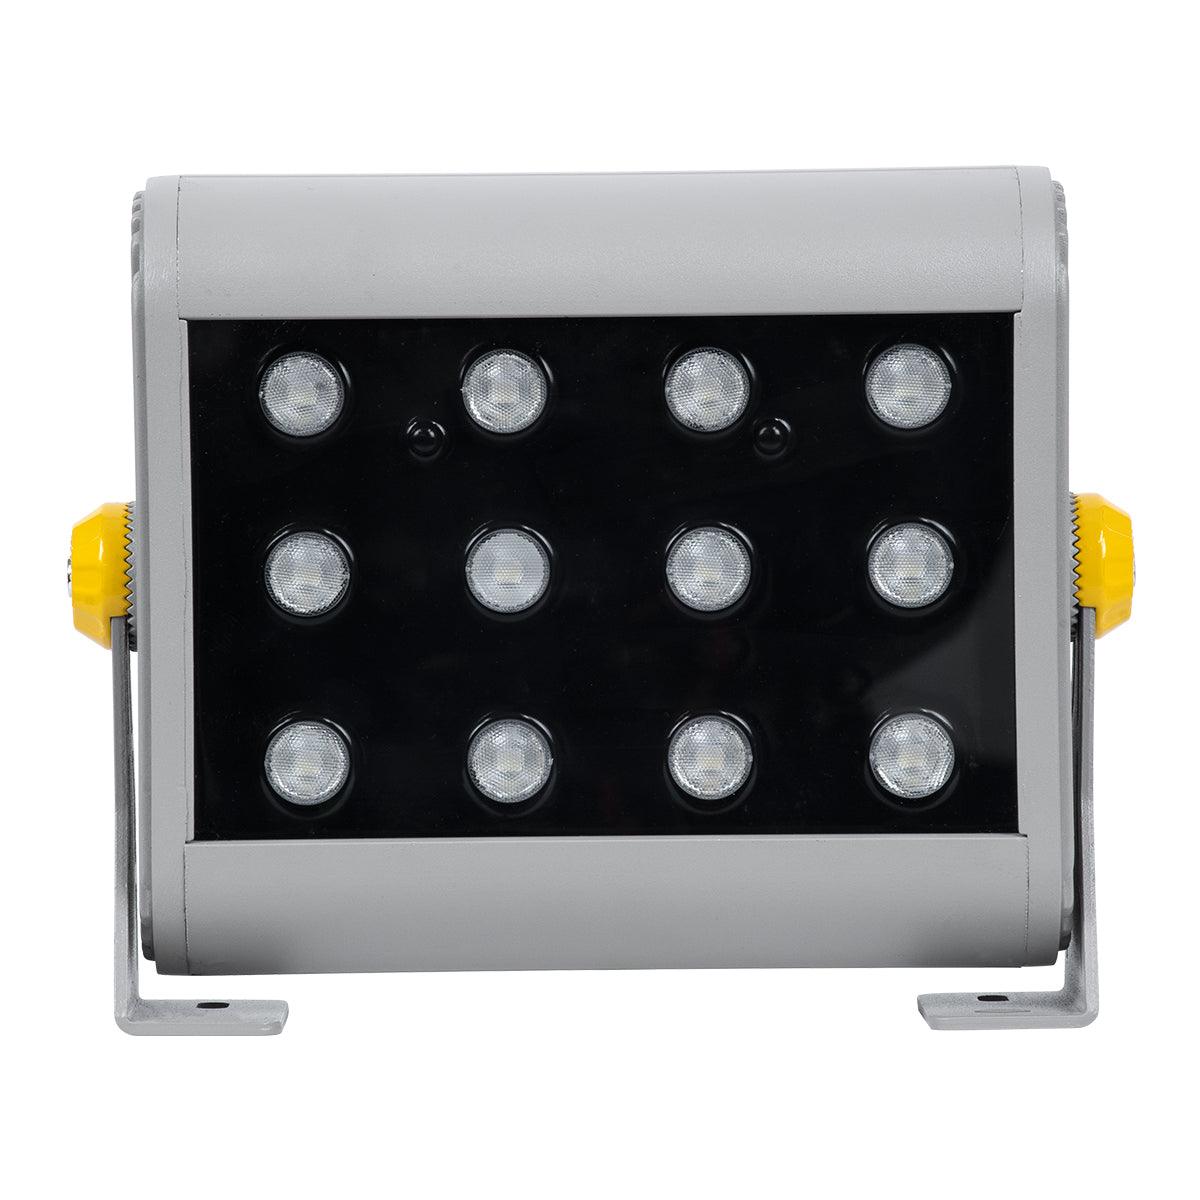 GloboStar® FLOOD-HENA 90641 Προβολέας Wall Washer για Φωτισμό Κτιρίων LED 24W 2400lm 30° DC 24V Αδιάβροχο IP65 Μ22.5 x Π6 x Υ16.5cm Πολύχρωμο RGB DMX512 - Ασημί - 3 Years Warranty - ledmania.gr